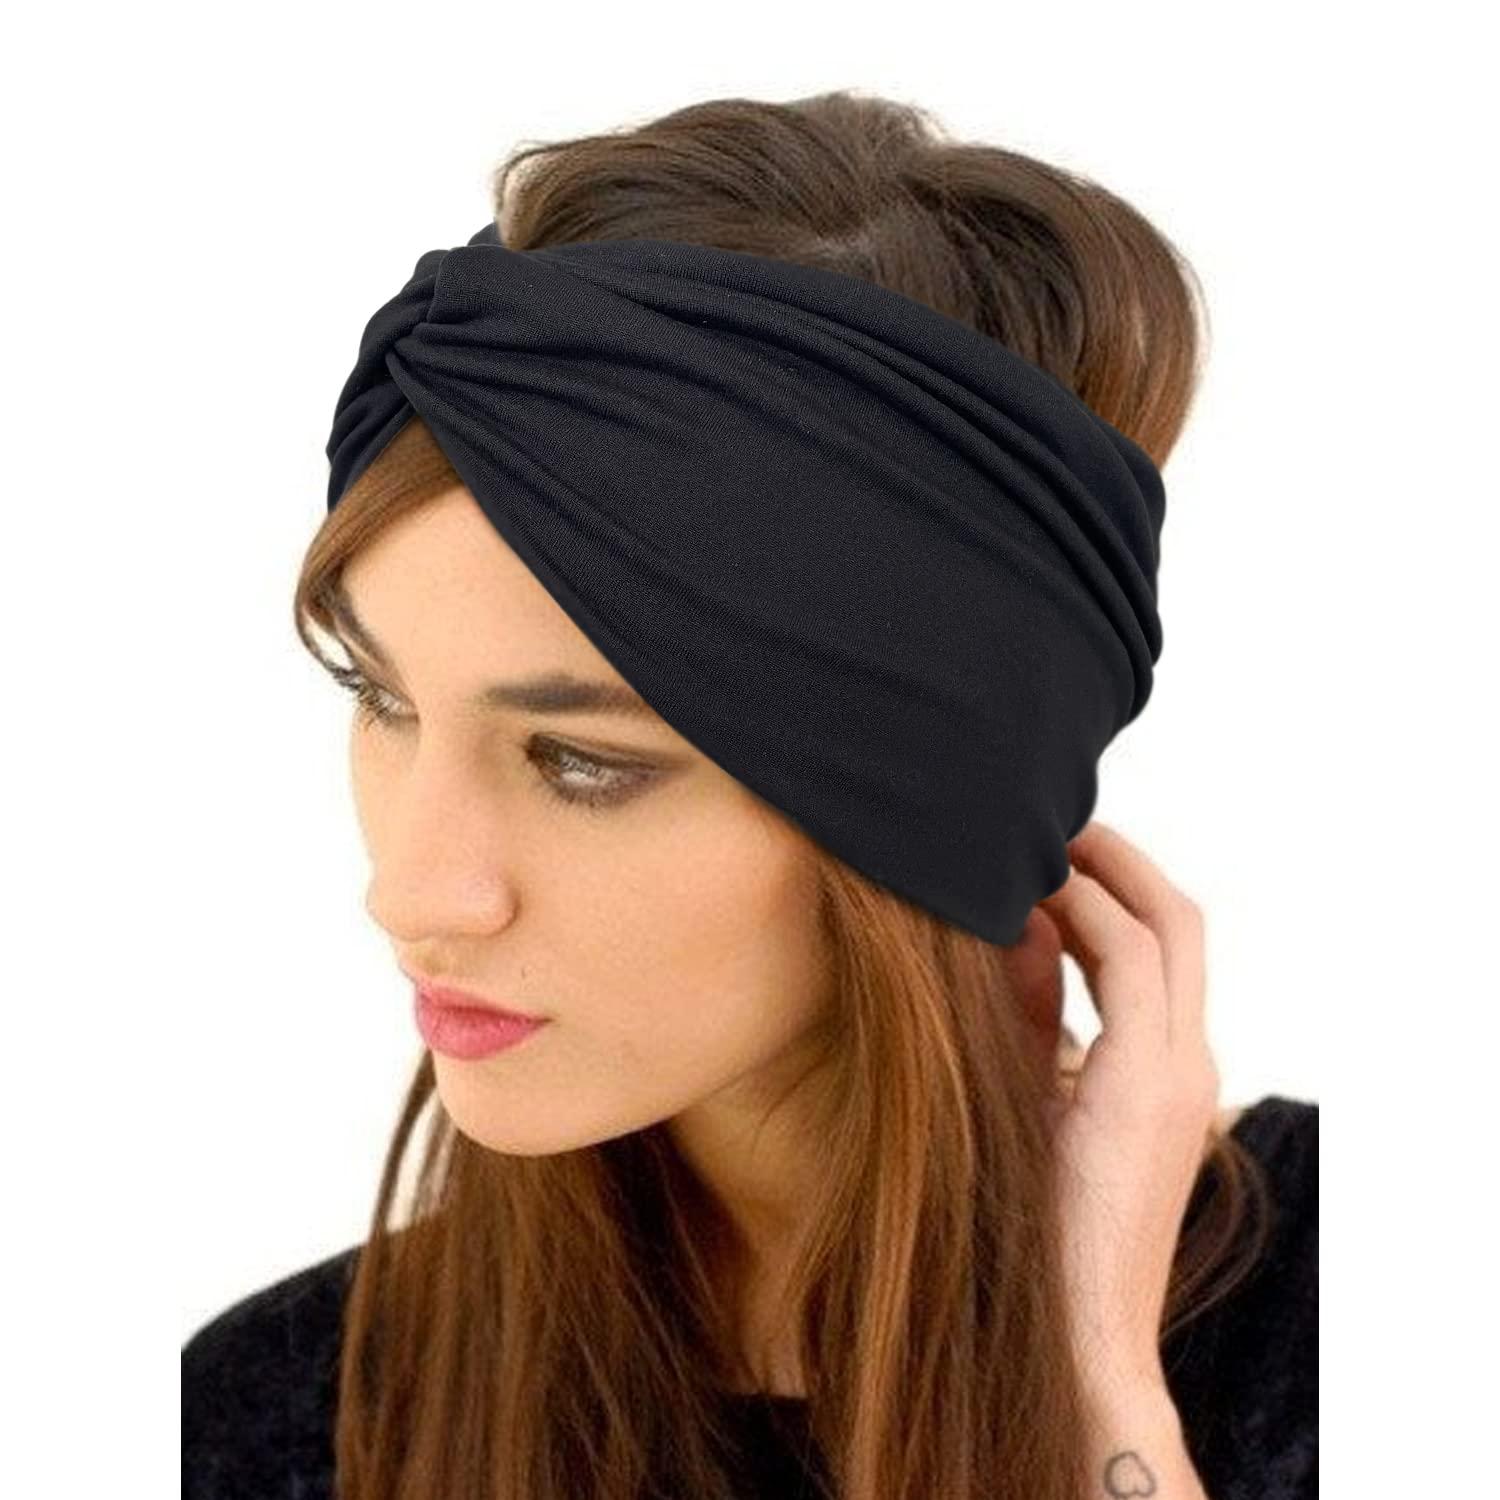  Jesries Workout Headbands for Women Non Slip